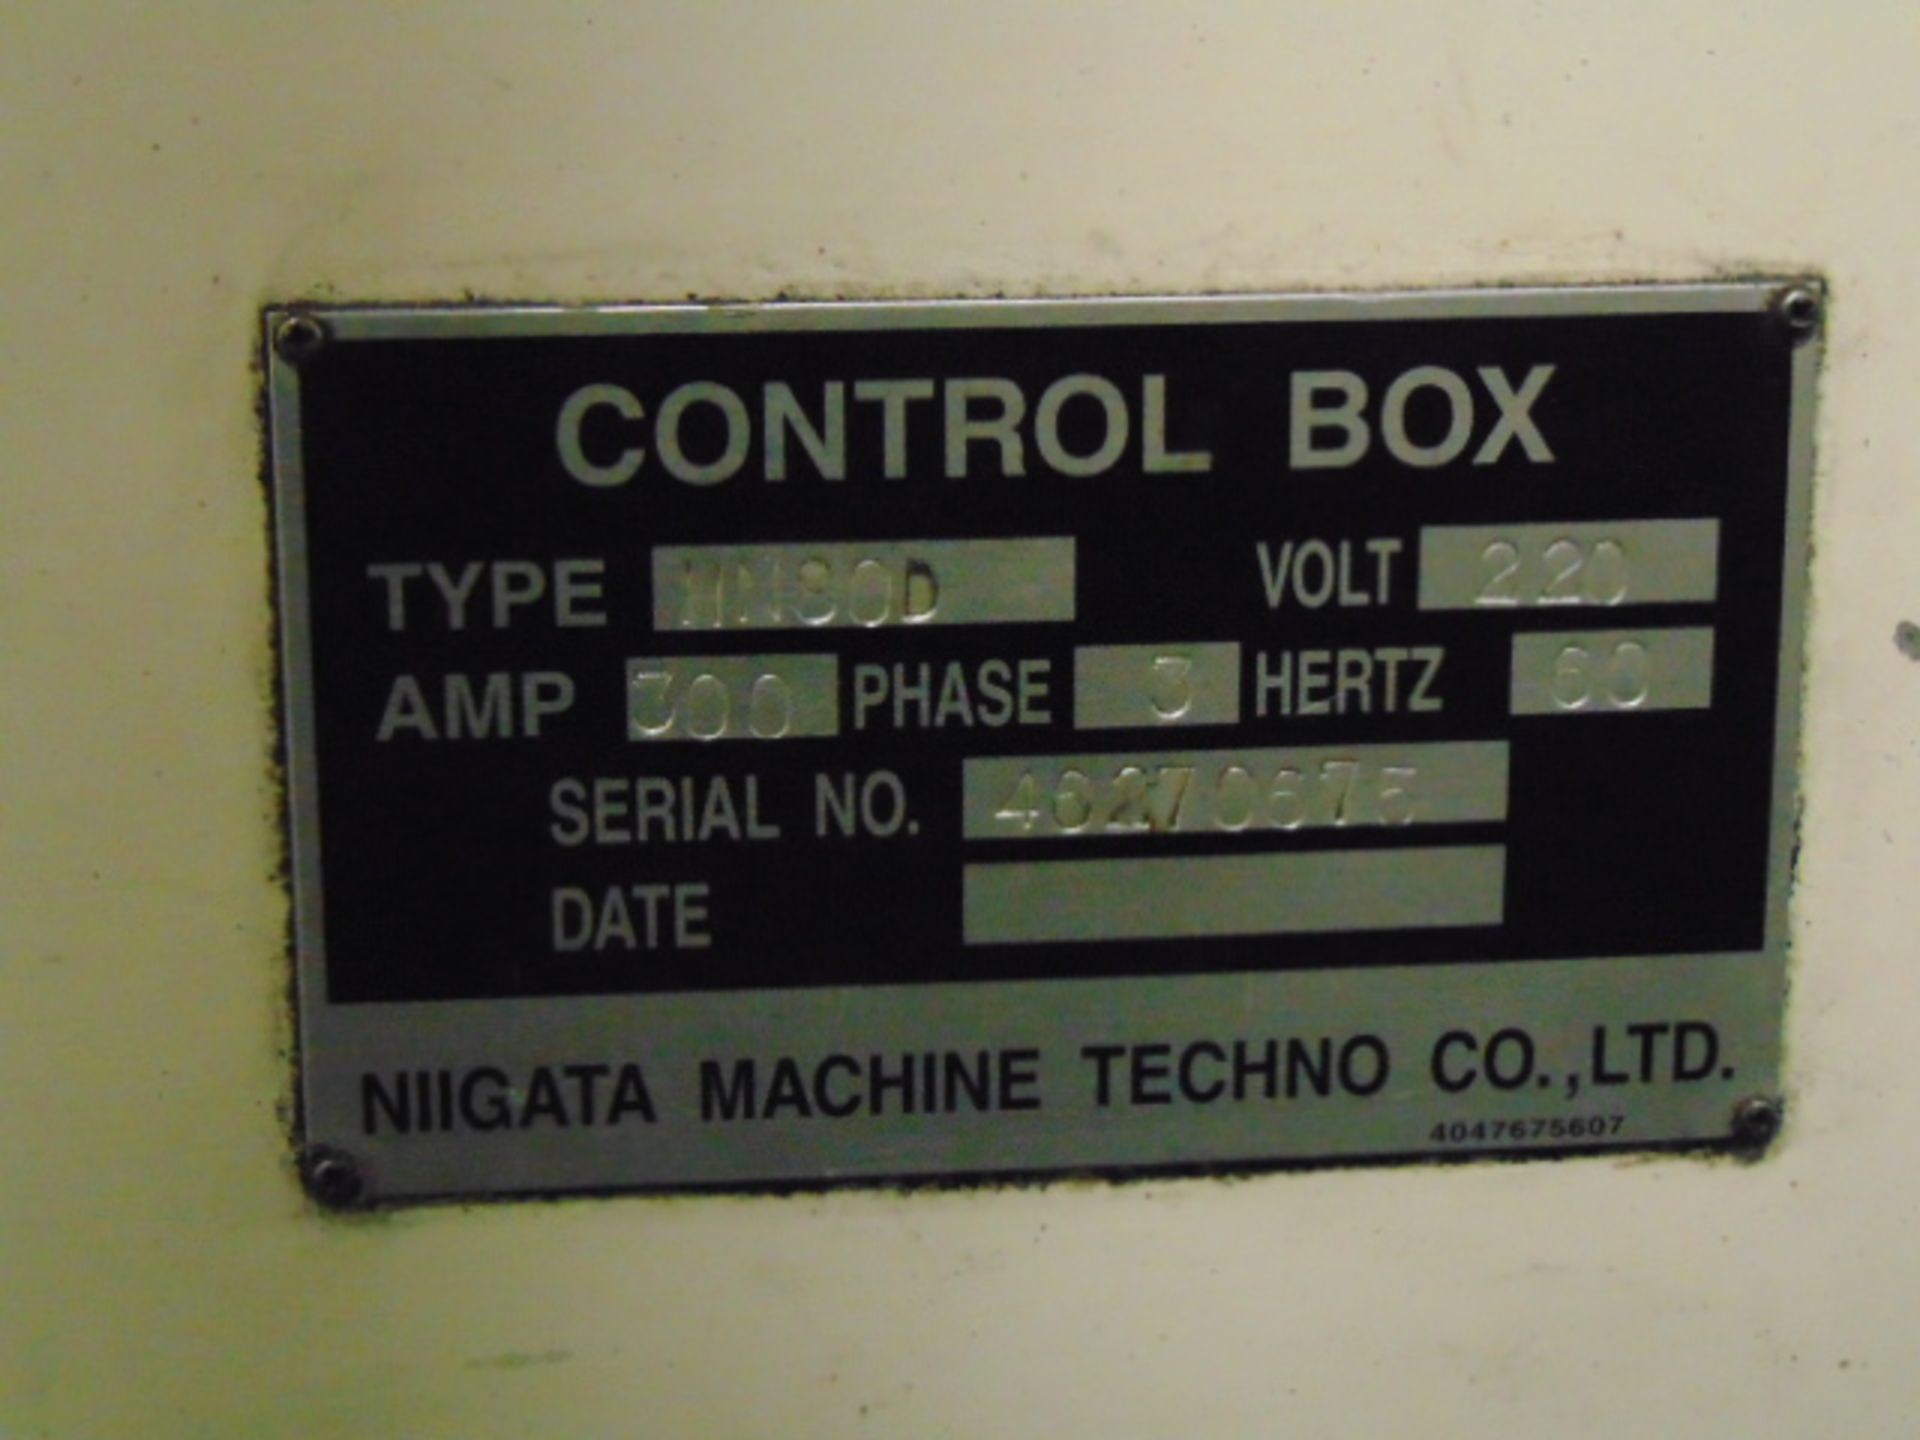 4-AXIS HORIZONTAL MACHINING CENTER, NIIGATA MDL. HN80D, new 2007, Fanuc 16i-MB CNC control, 31.5” - Image 29 of 29